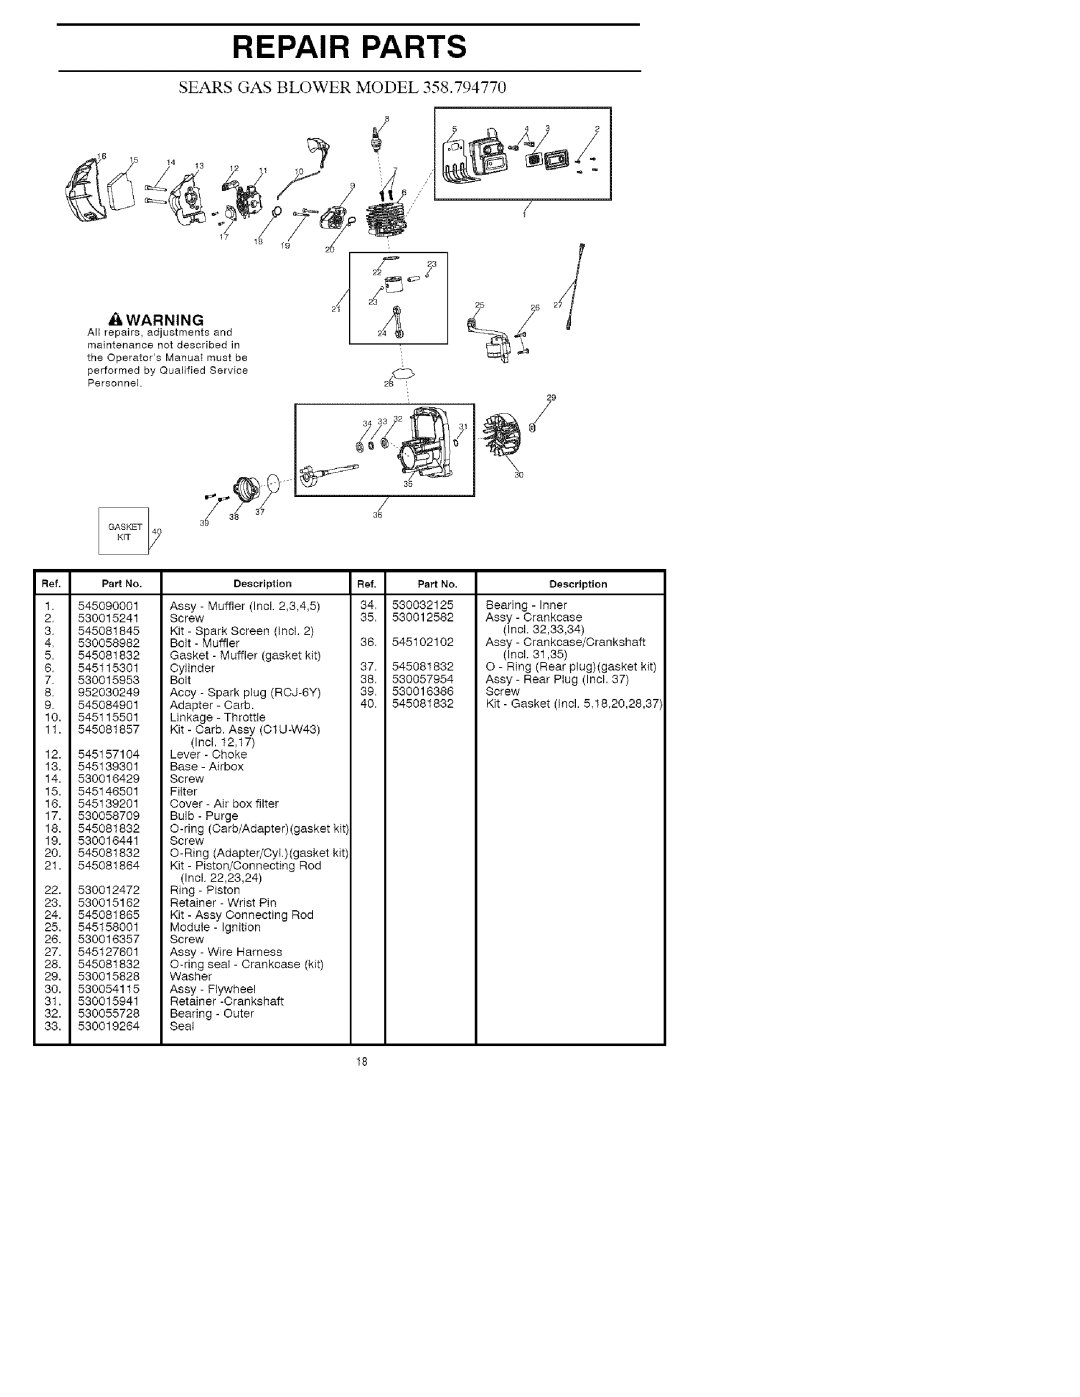 Craftsman 358.79477 manual Repair Parts, =/=F=¢ z, Sears Gas Blower Model, Lwarning 